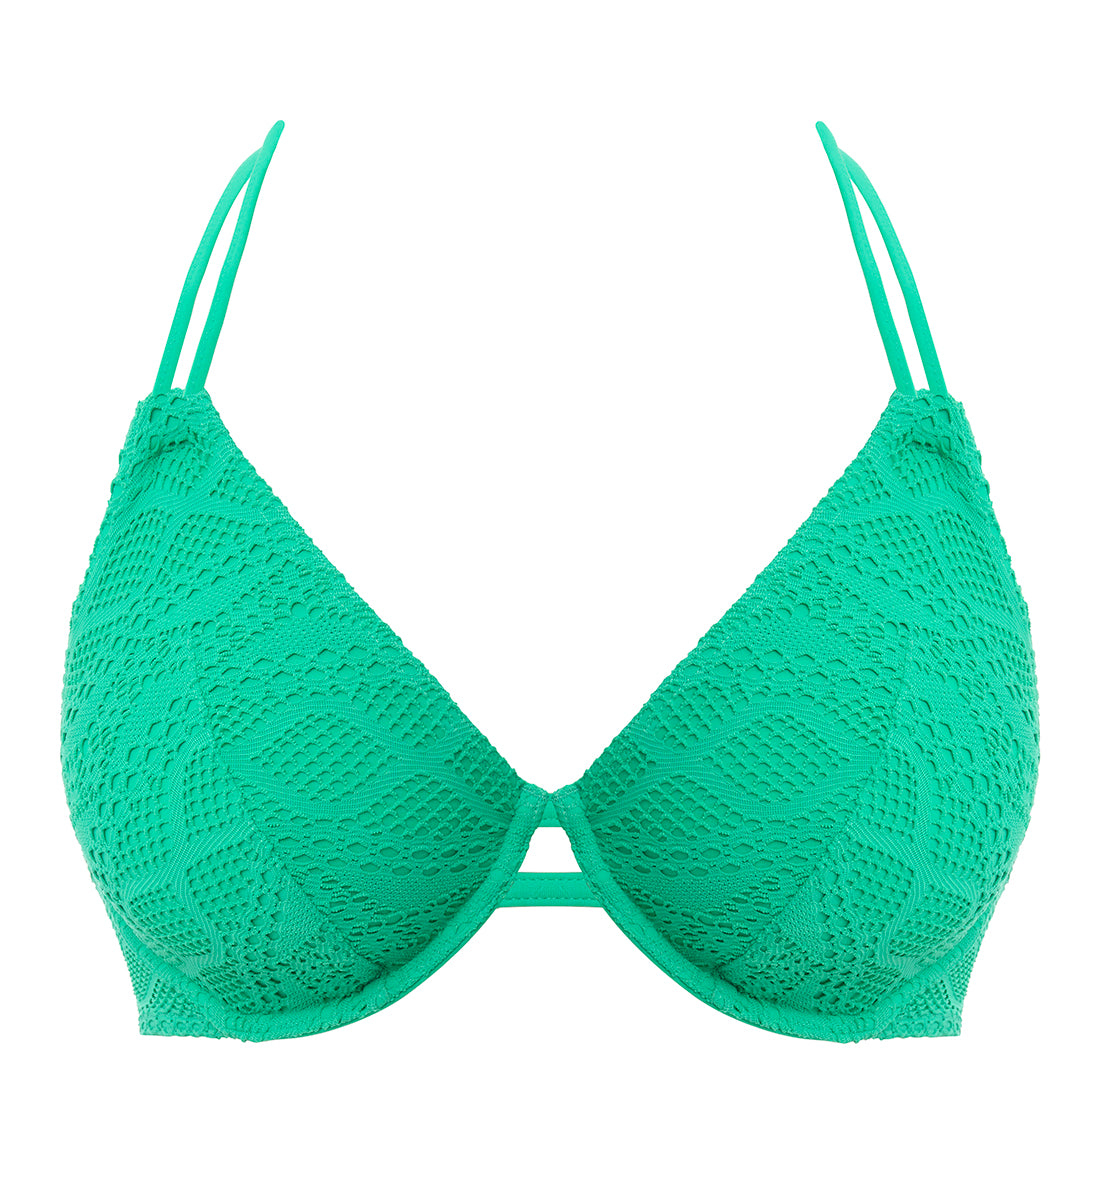 Freya Sundance Bandless Underwire Halter Bikini Top (3971),30DD,Jade - Jade,30DD